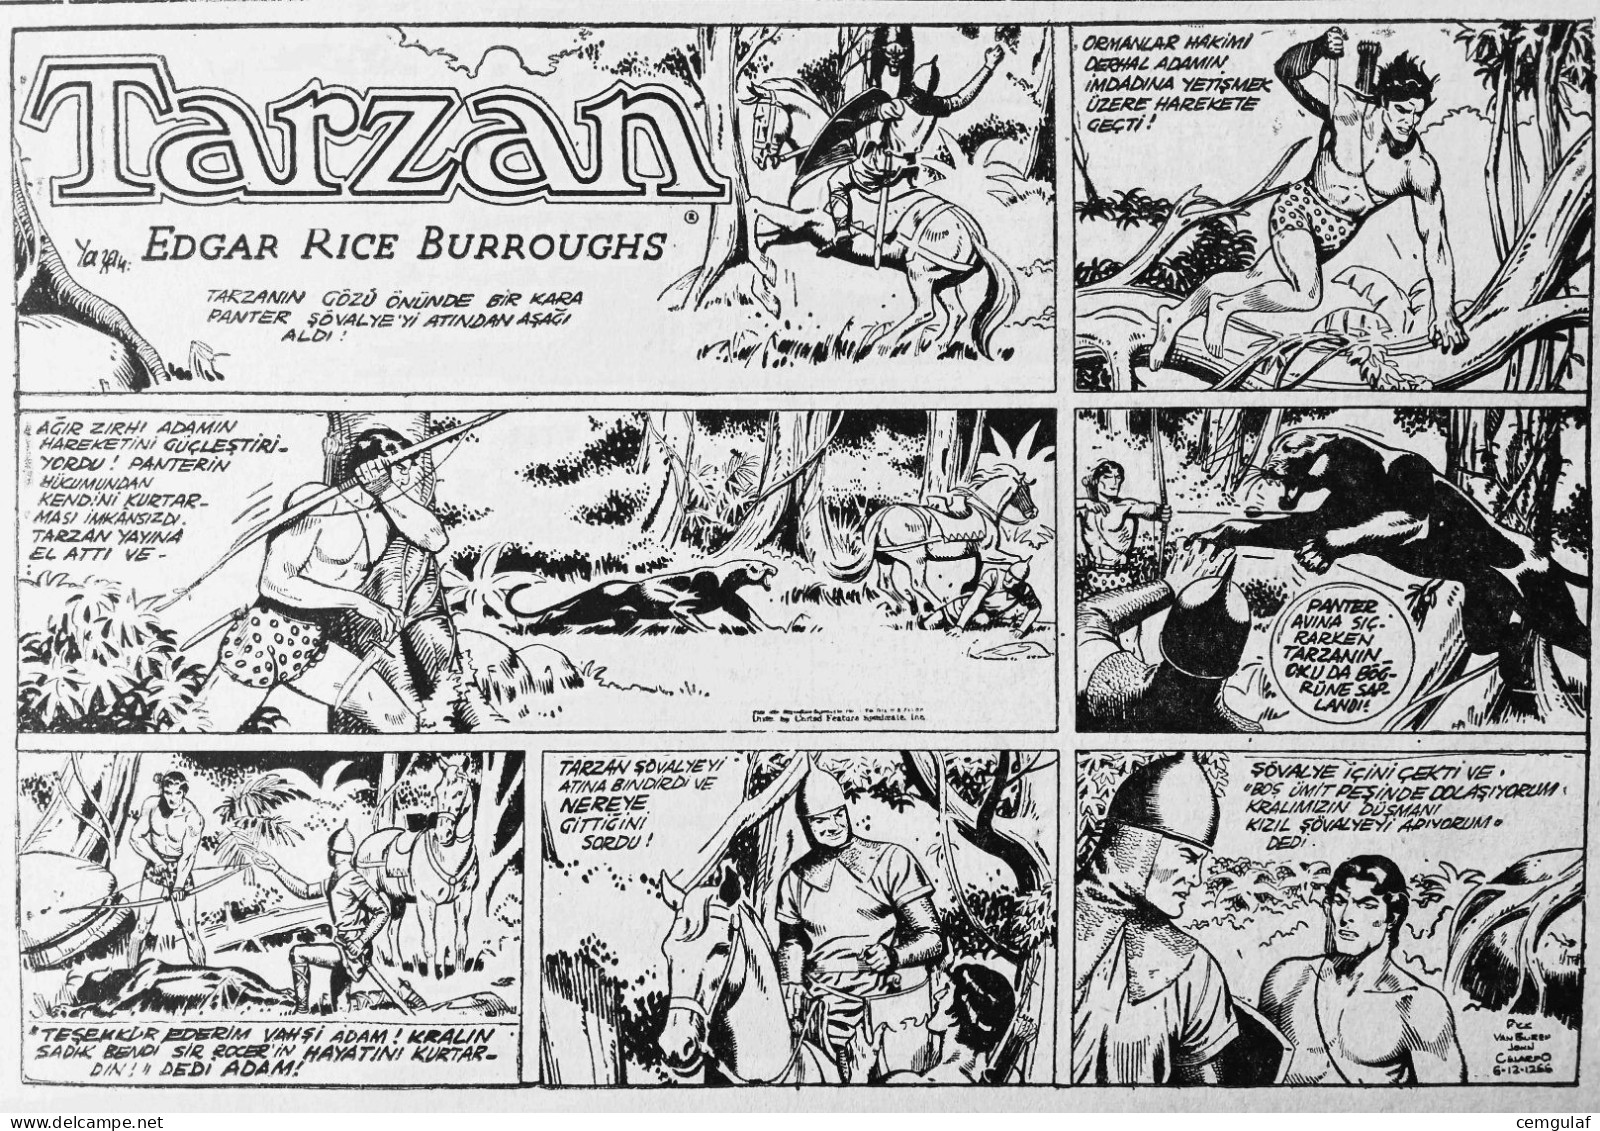 TARZAN-LI'L ABNER-The Katzenjammer Kids Turkish Edition- VATAN NEWSPAPER SUNDAY ADDITION JANUARY 1956 - Brocante & Collections